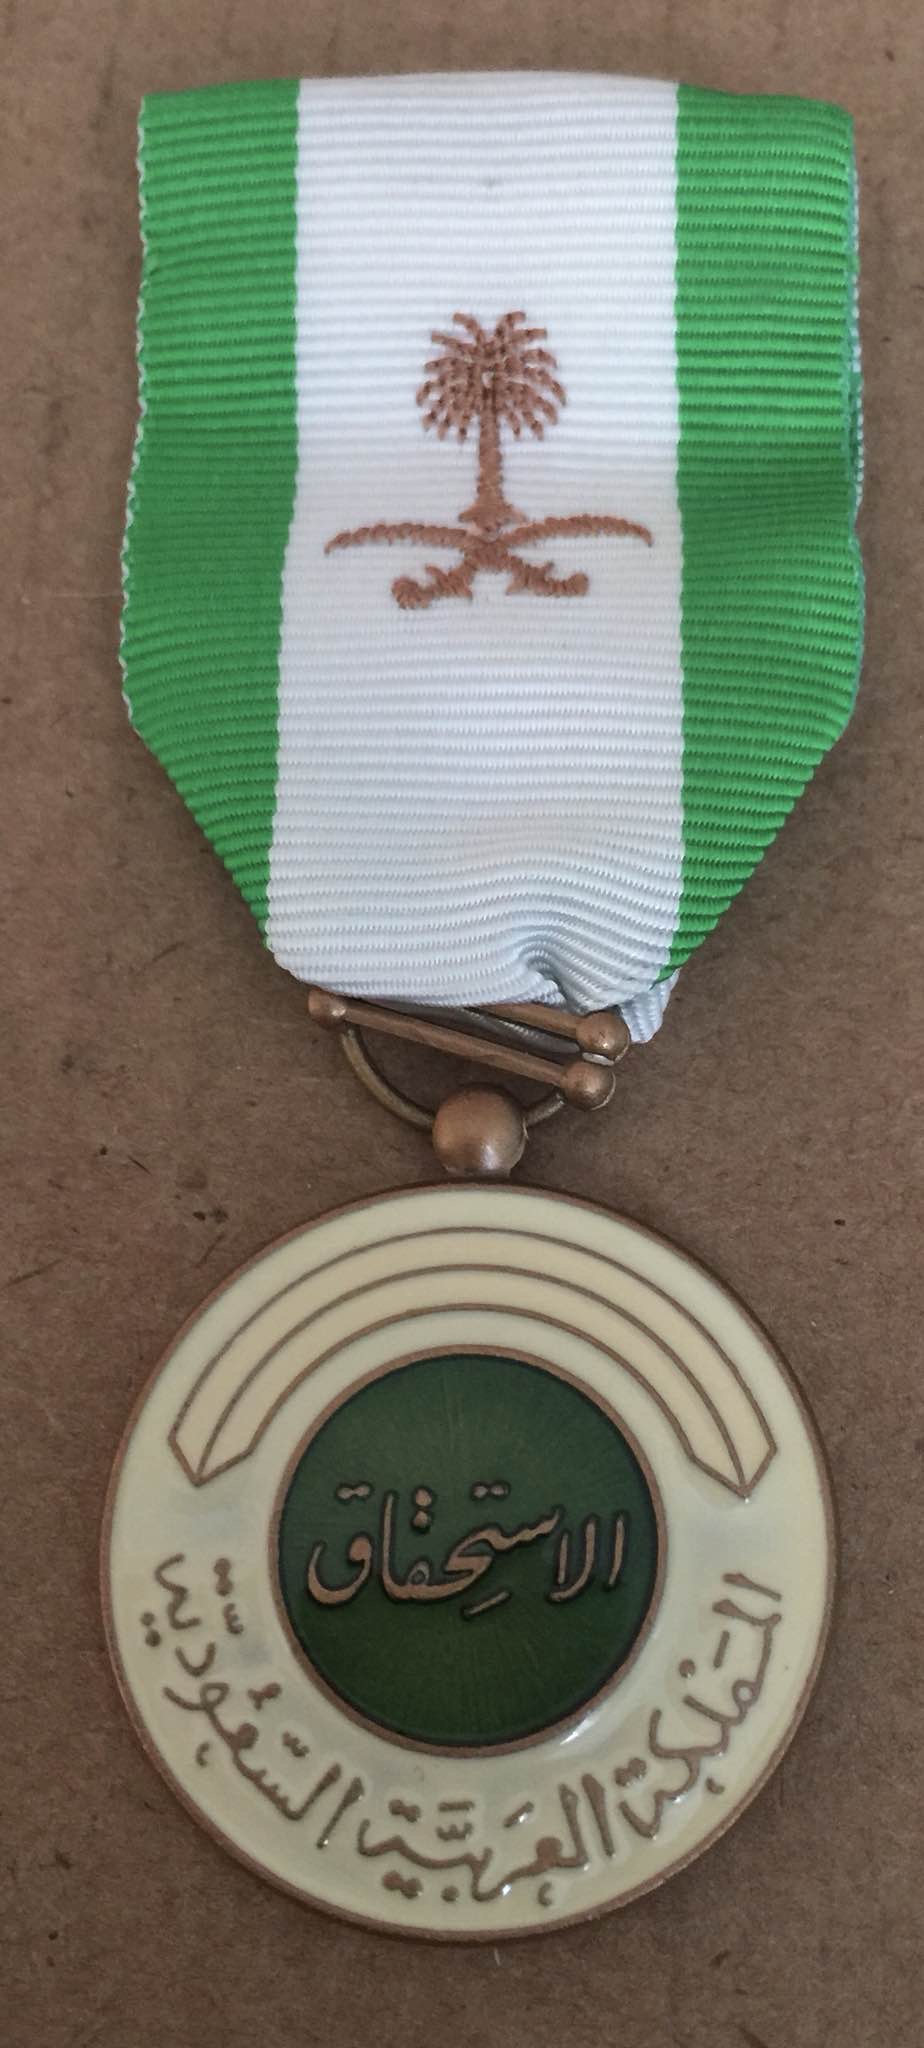 1971 Kingdom of Saudi Arabia Order of Merit Medal Badge Nichan Nout Full Size المملكة العربية السعودية وسام الاستحقاق 